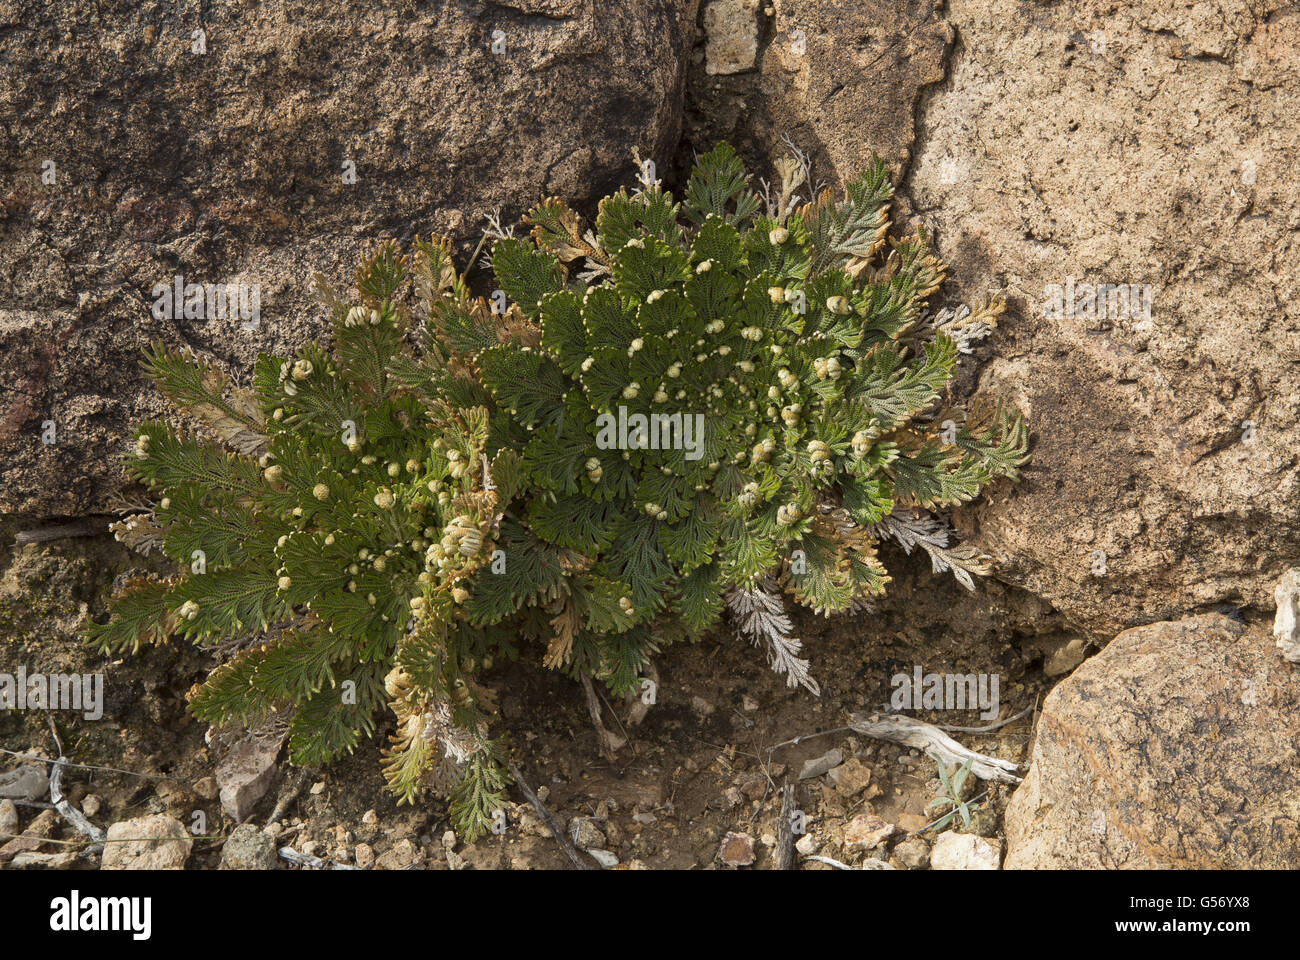 Resurrection Fern (Selaginella lepidophylla) growing amongst rocks in desert, Big Bend N.P., Chihuahuan Desert, Texas, U.S.A., February Stock Photo